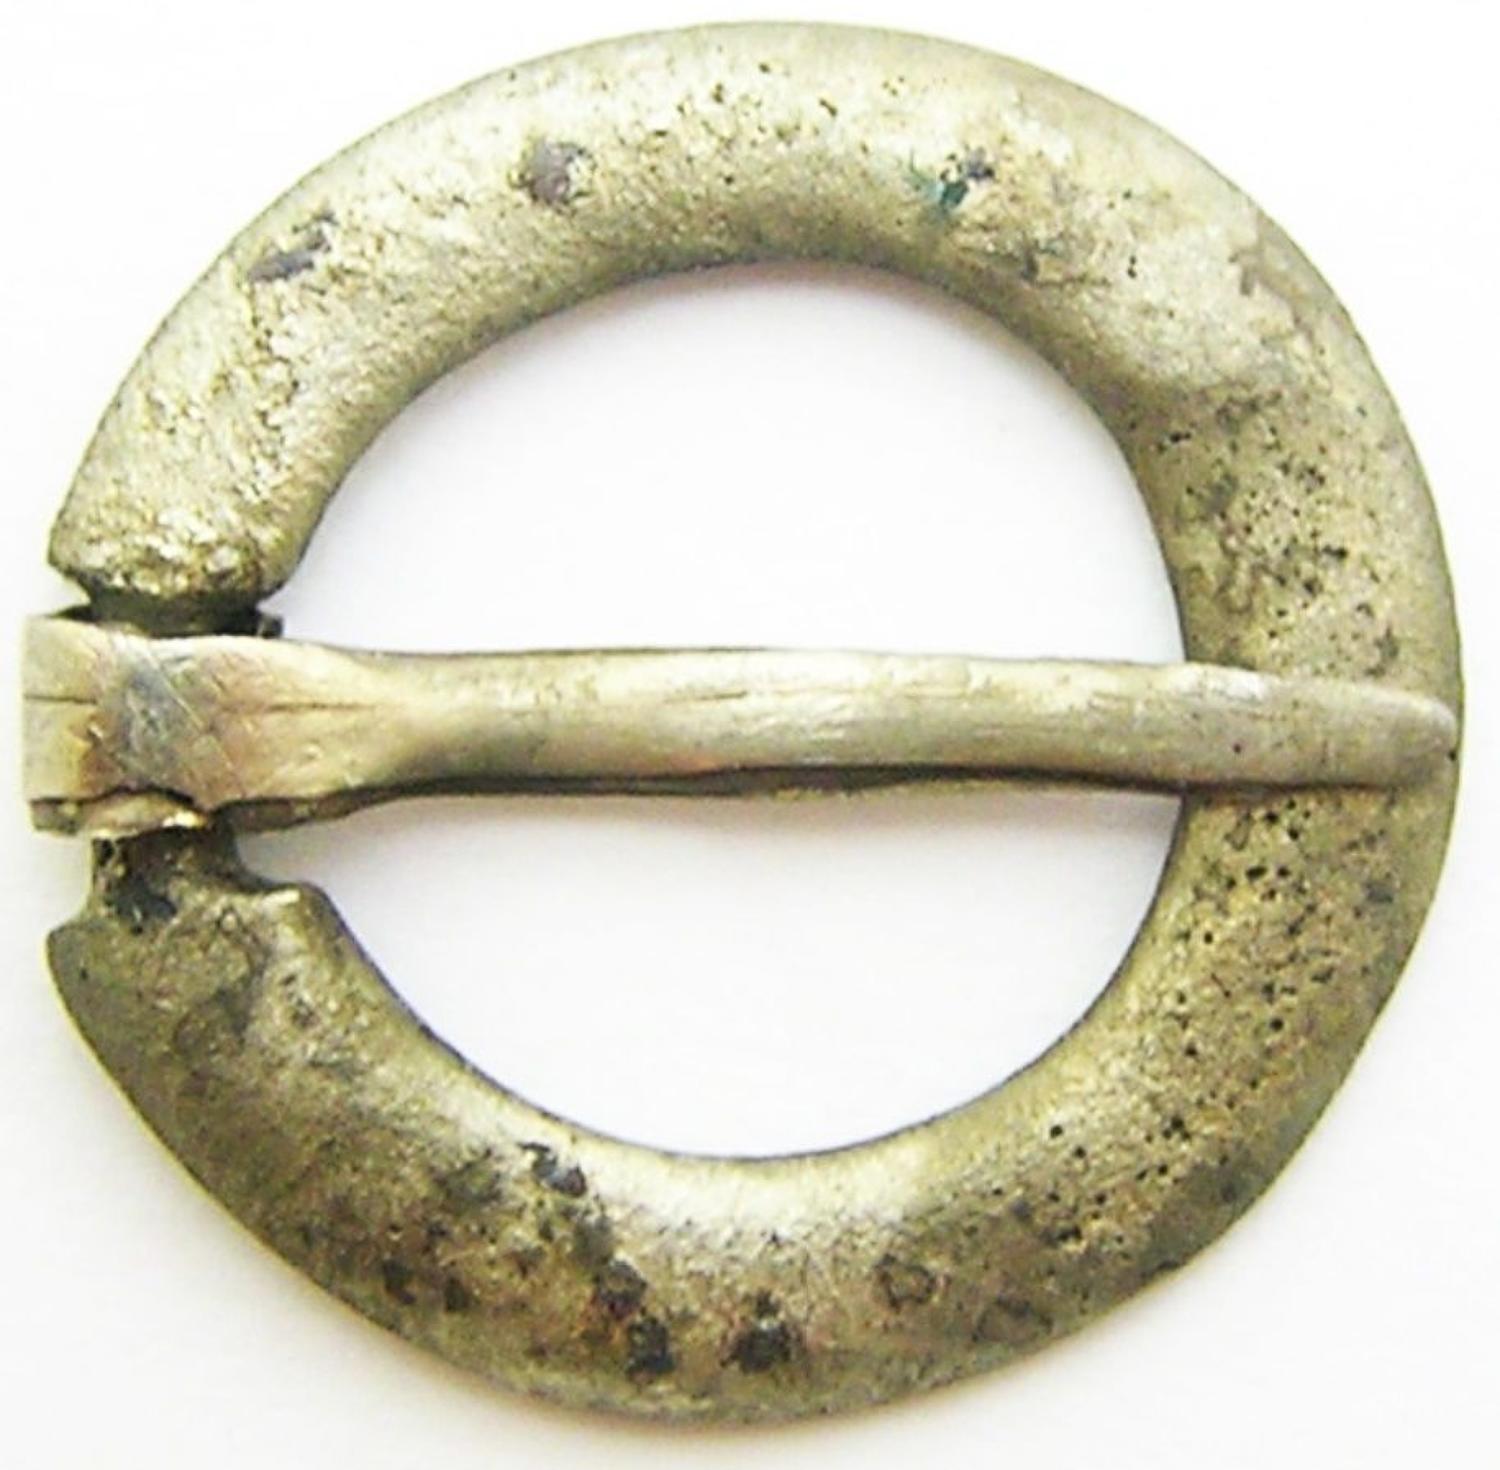 Simple Medieval silver ring brooch